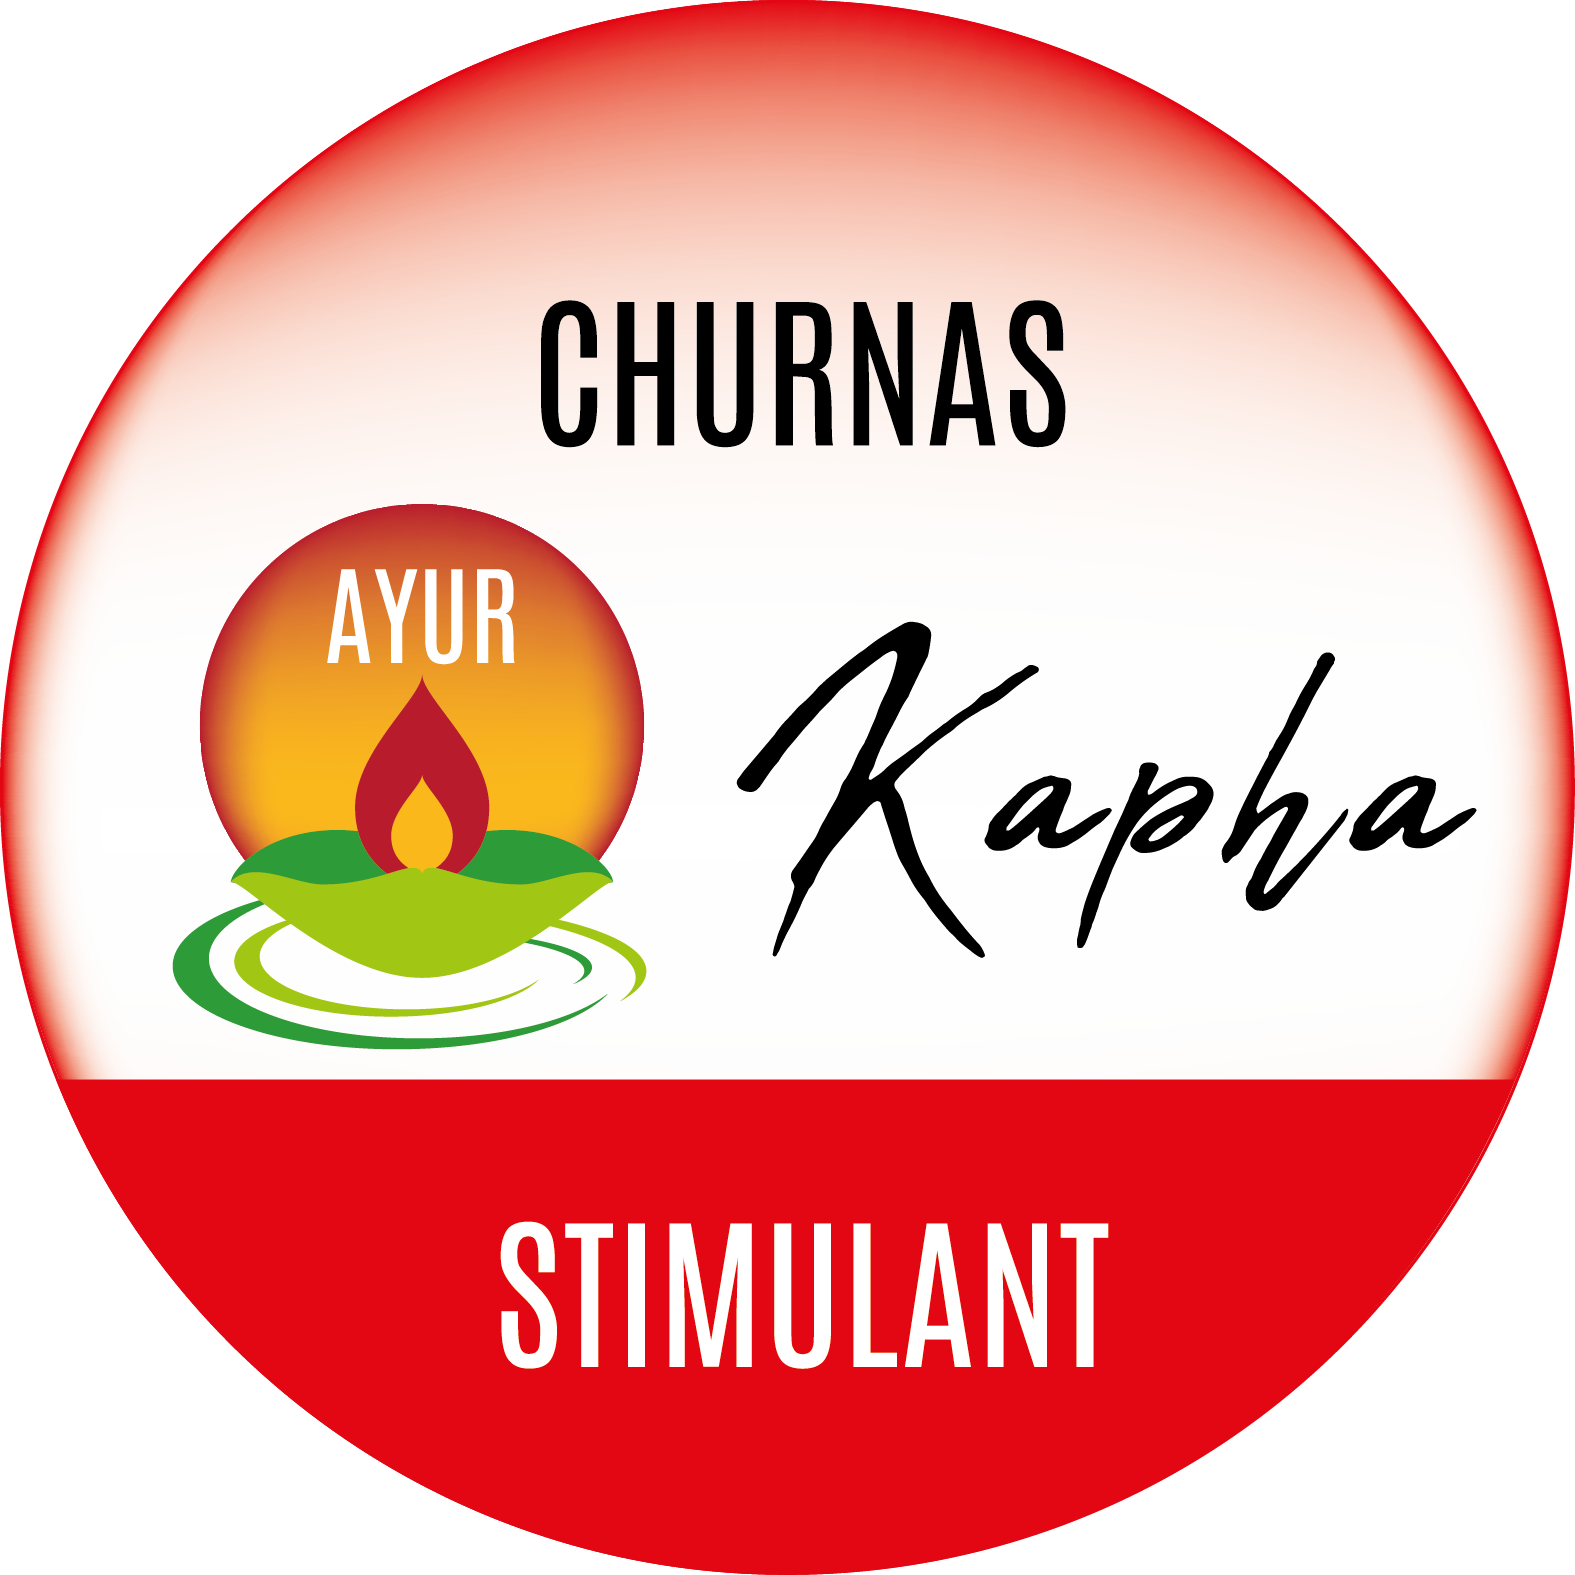 Churnas Kapha